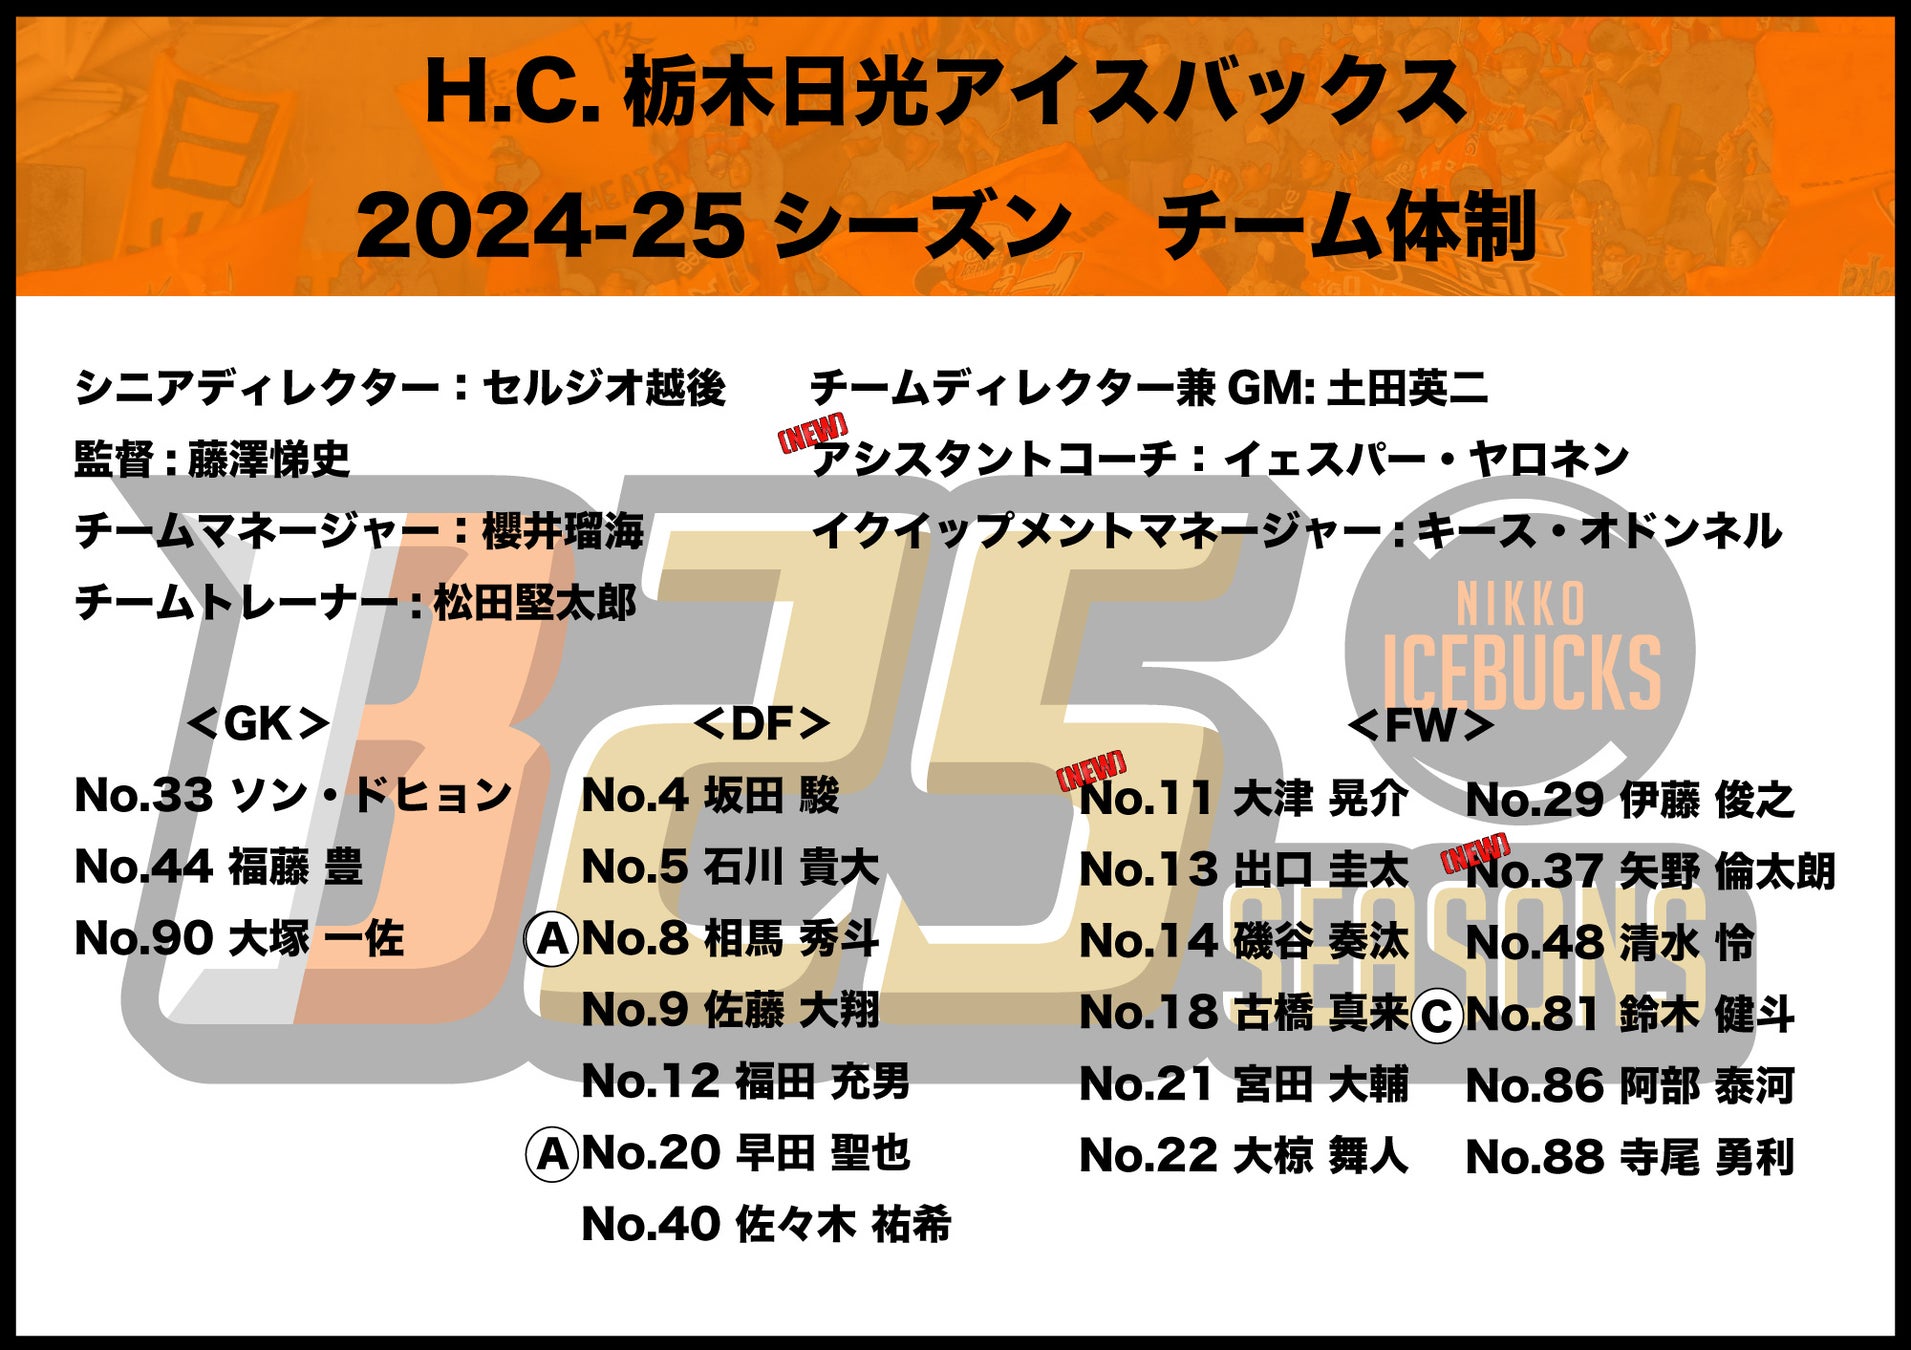 H.C.栃木日光アイスバックス2024-2025シーズン チーム体制決定